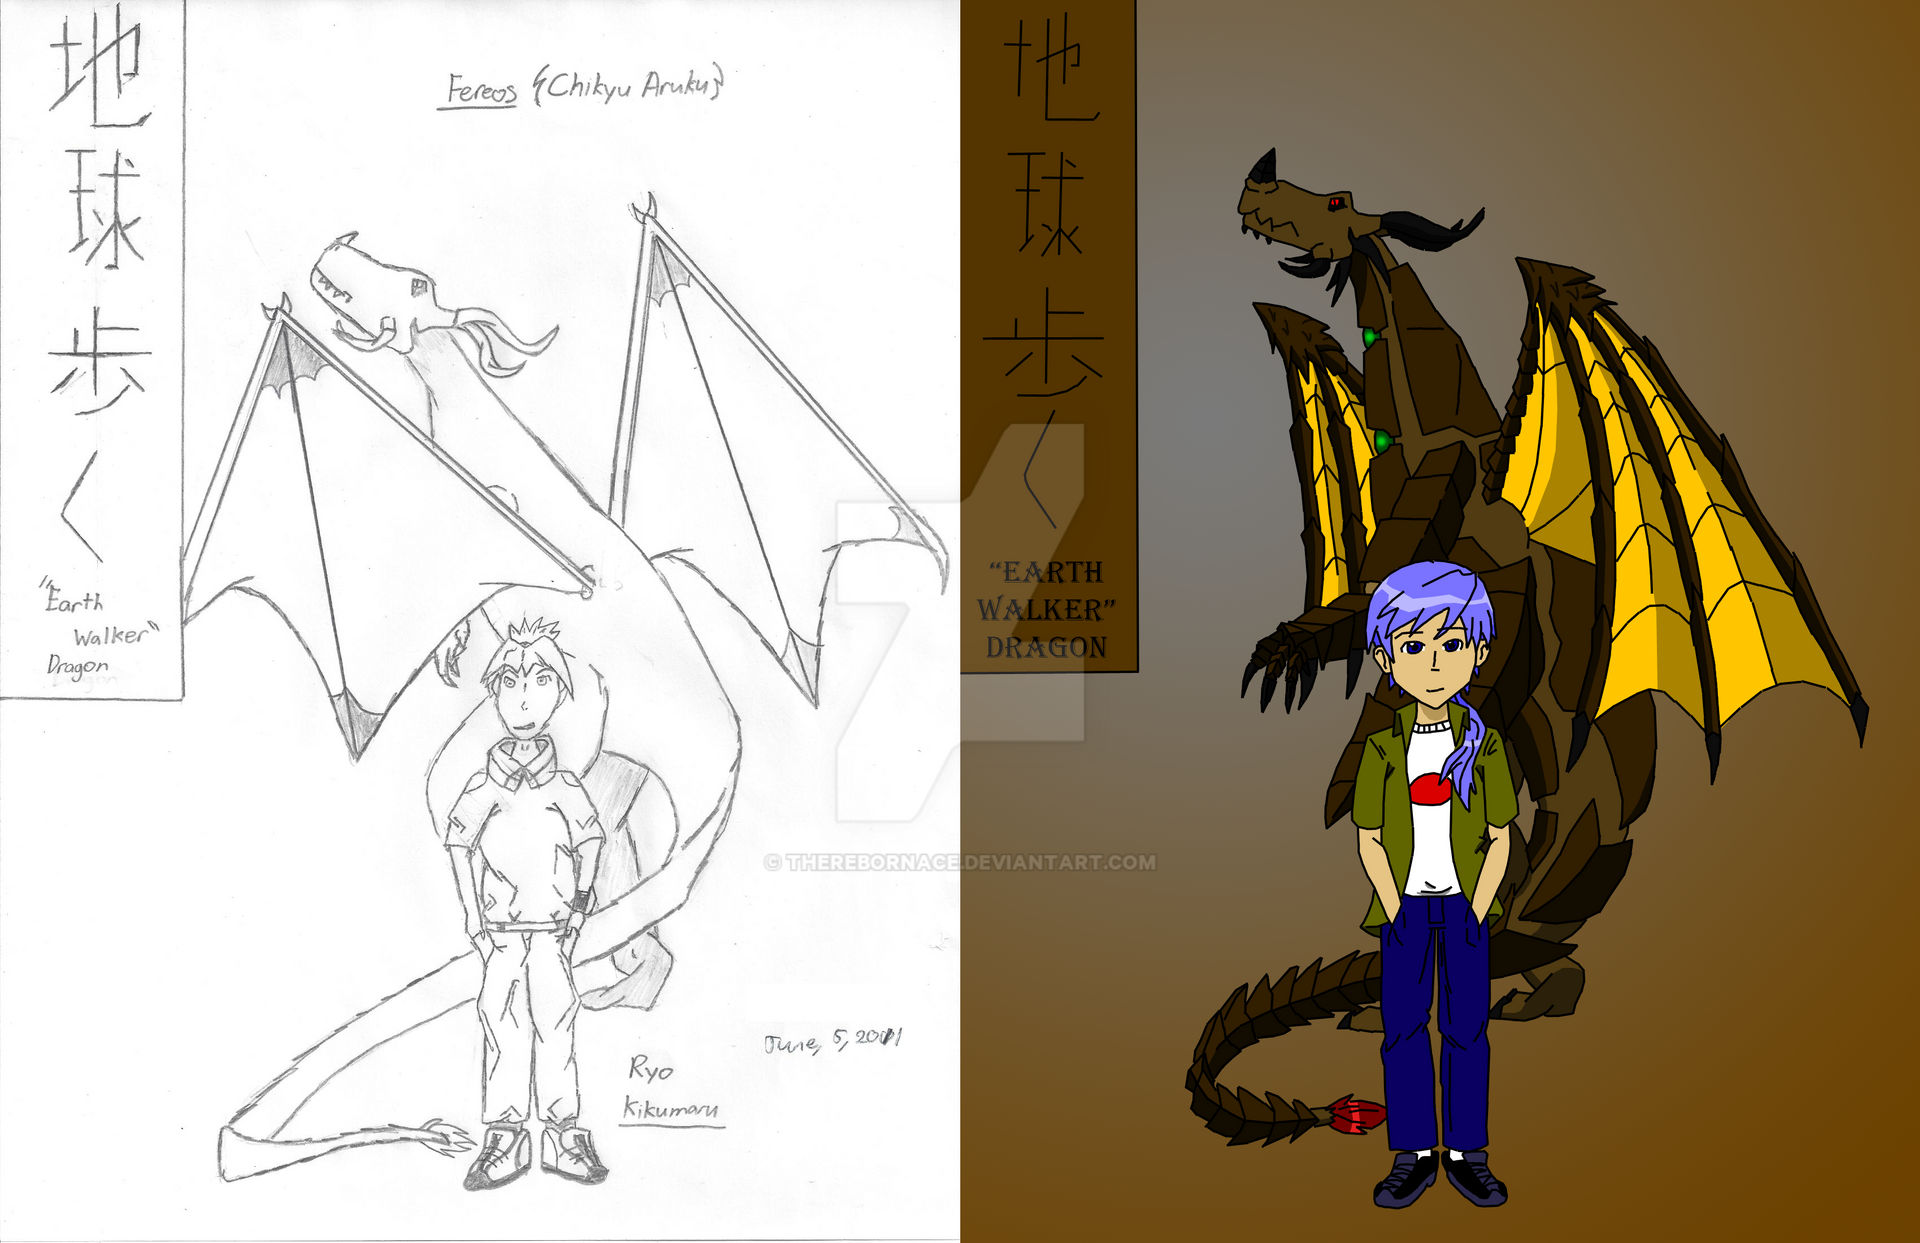 Ryosuke Kikumaru and Fereos - Before and After